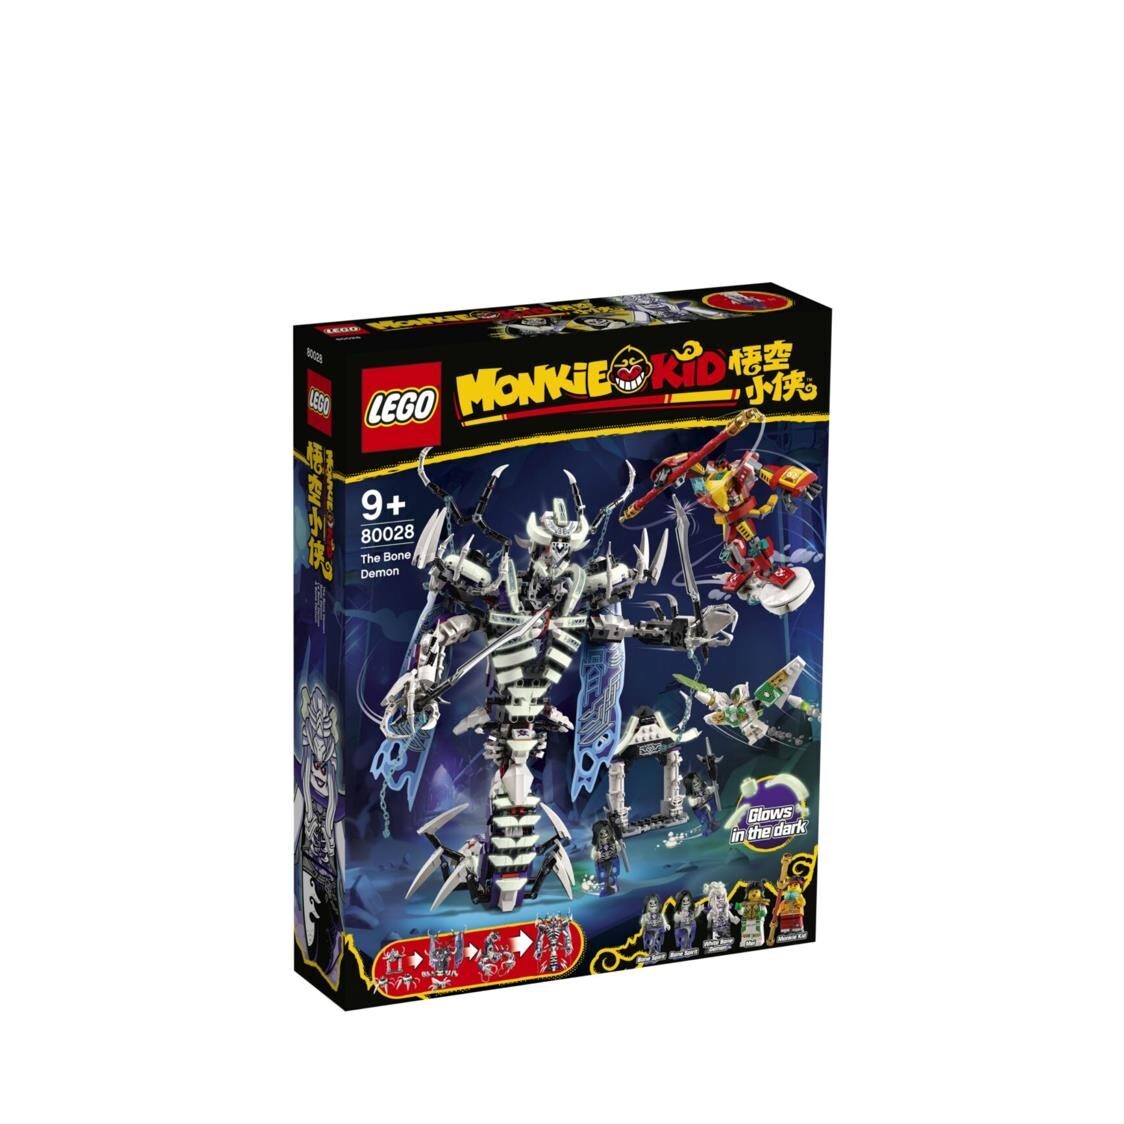 LEGO Monkie Kid - The Bone Demon 80028